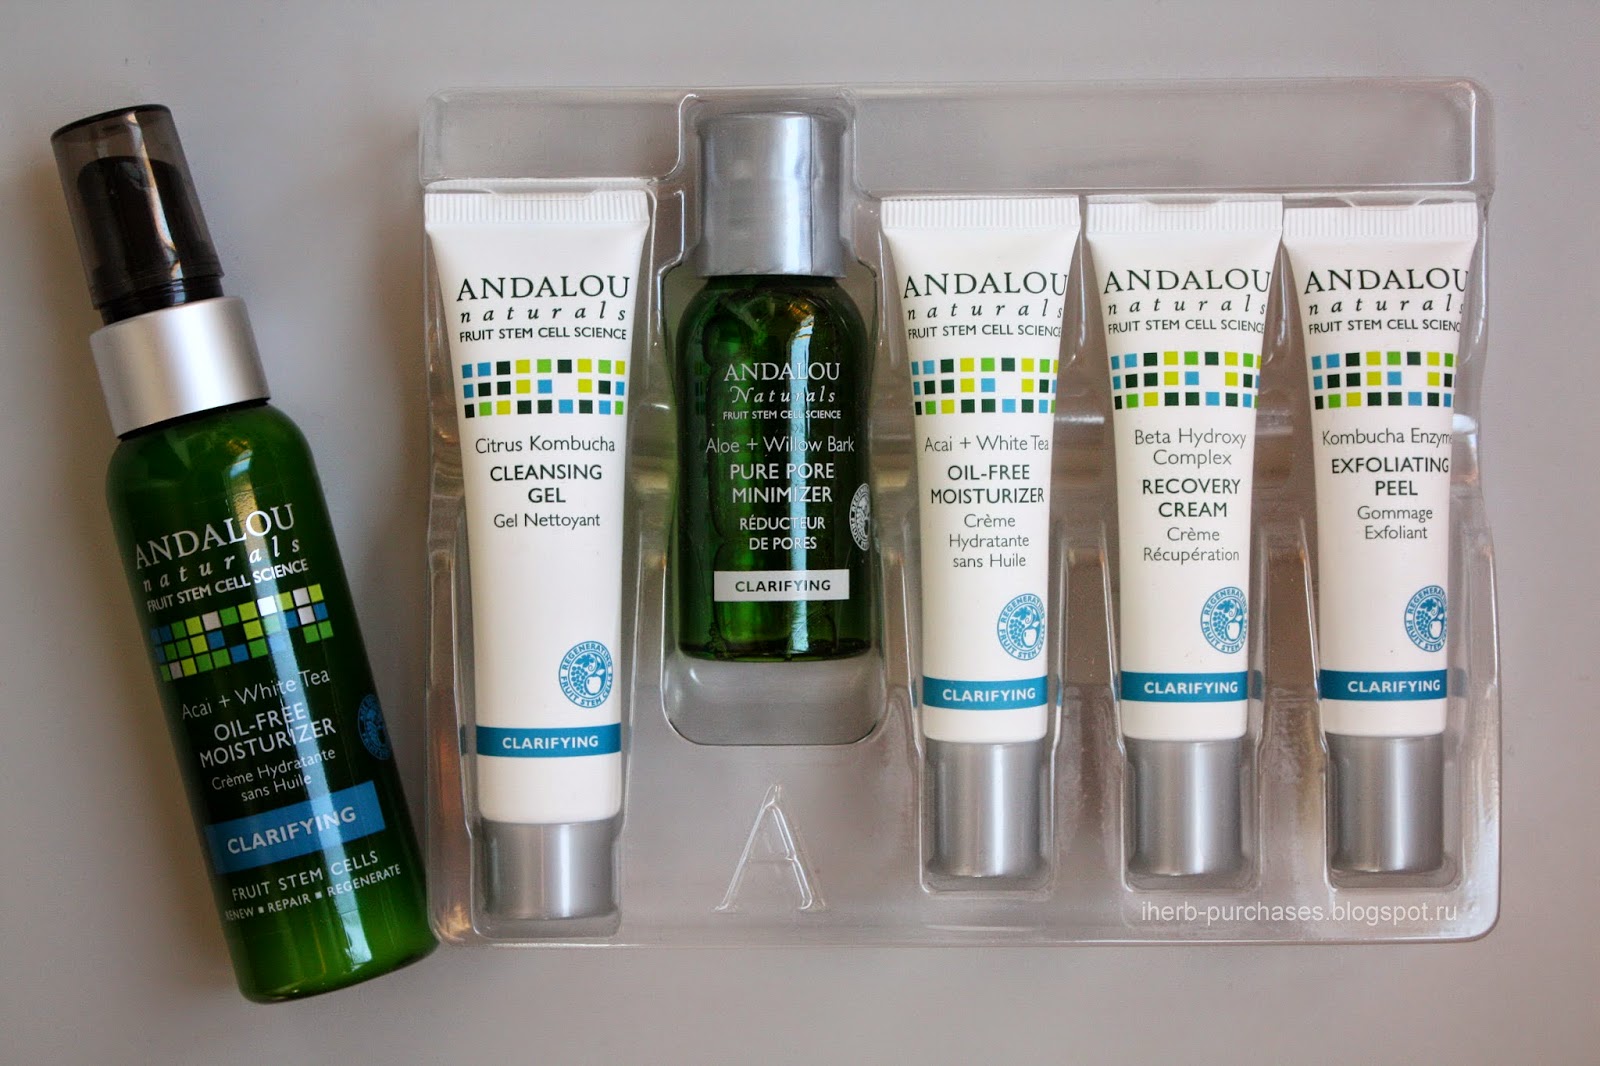 Andalou Naturals, Get Started Clarifying, Skin Care Essentials, 5 Piece Kit + Andalou Naturals, Oil-Free Moisturizer, Acai + White Tea, 2.1 fl oz (62 ml)